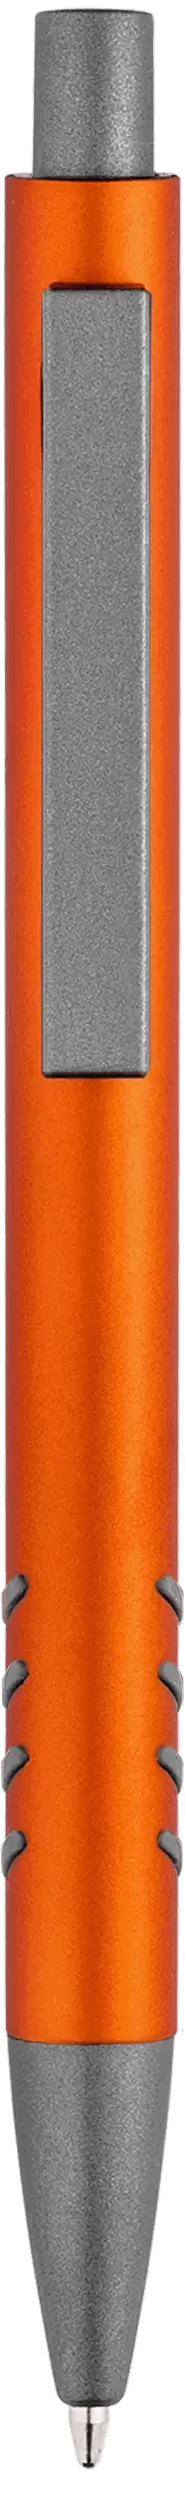 Ручка MOKKO TITAN Оранжевая 1135.05